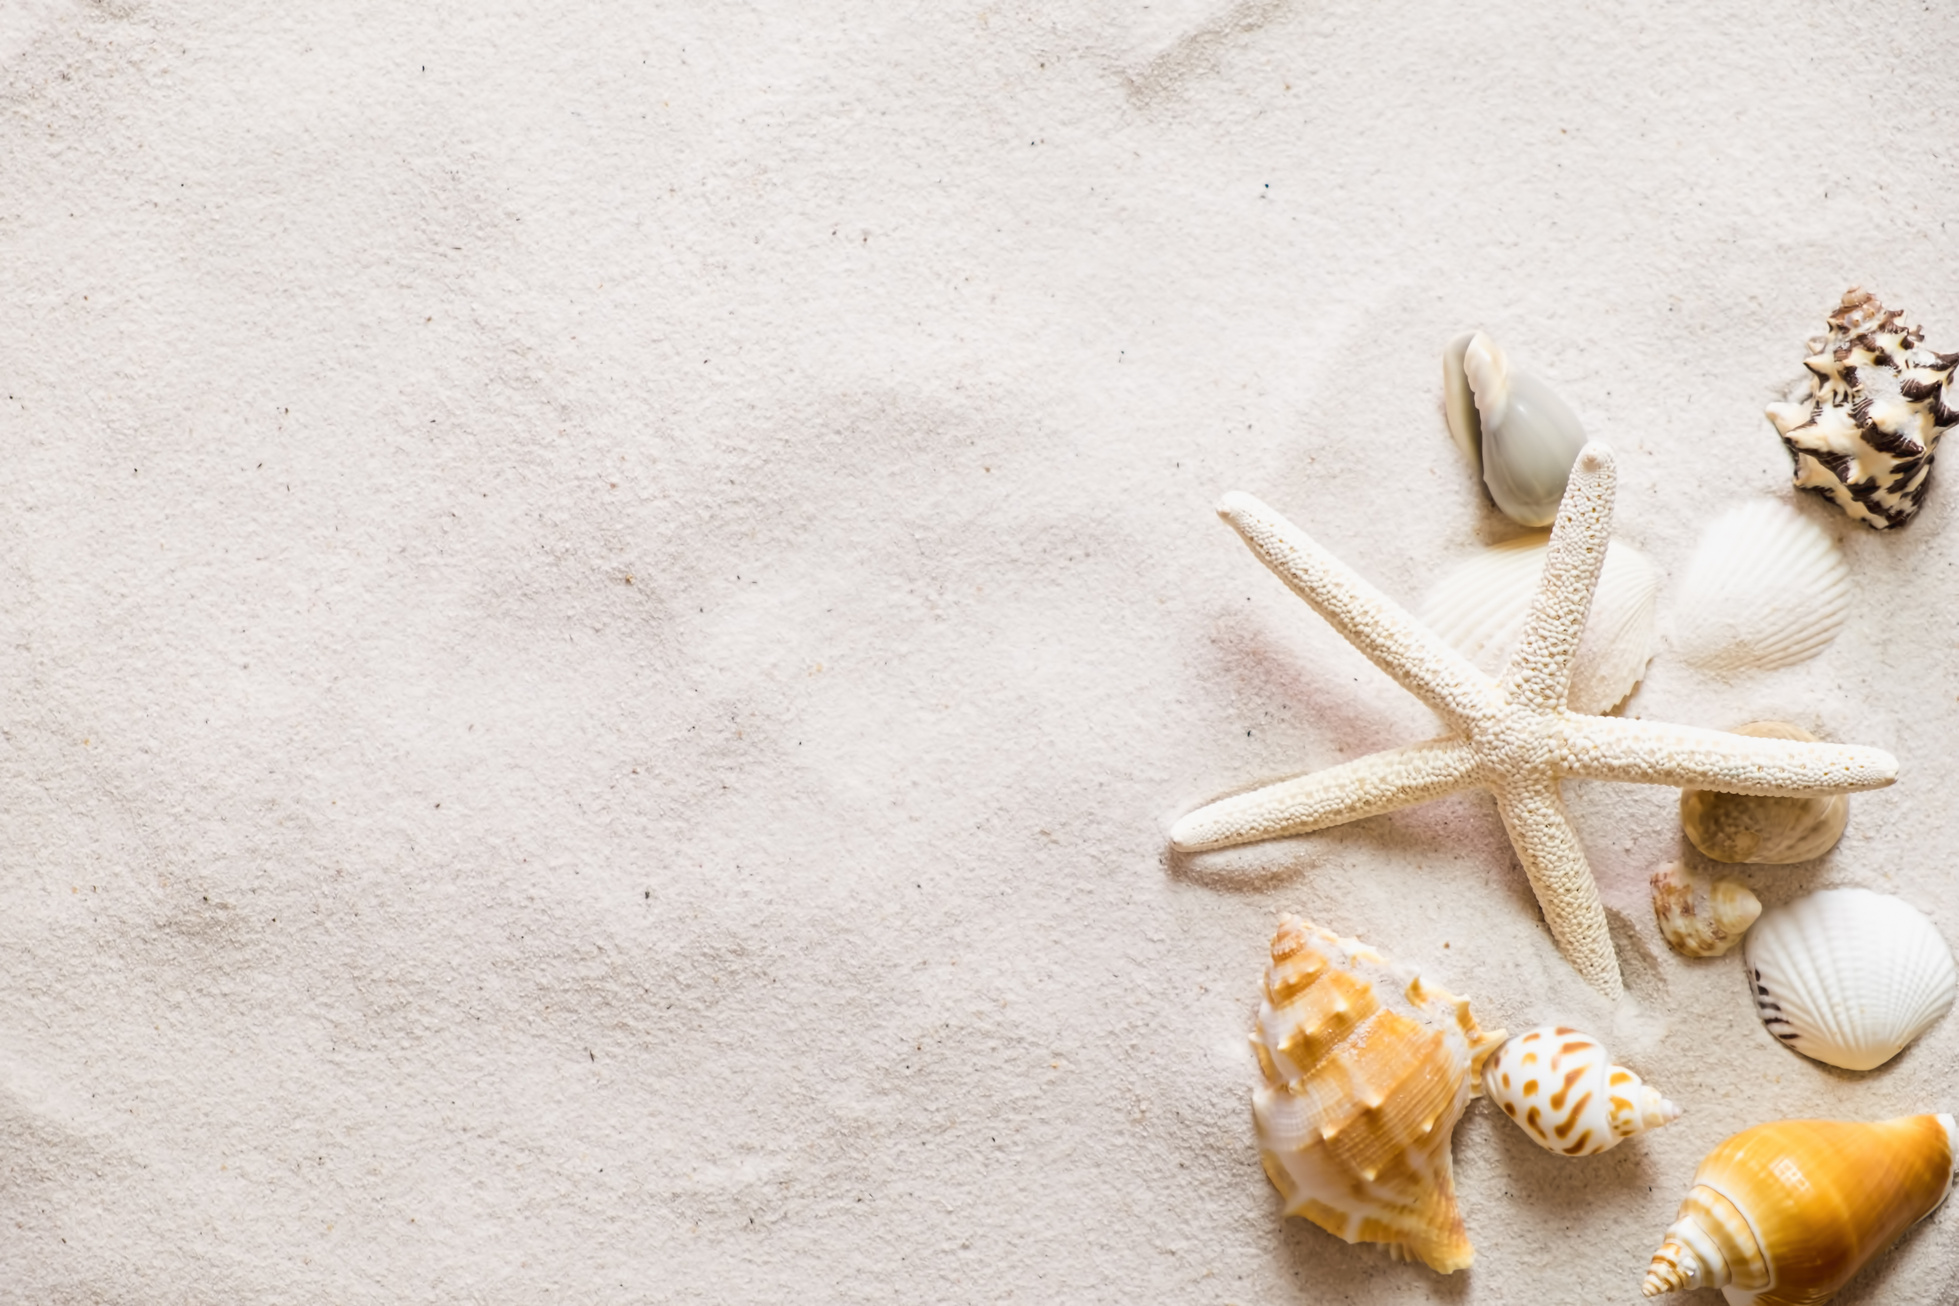 Beach Sand with Seashells and Starfish Background